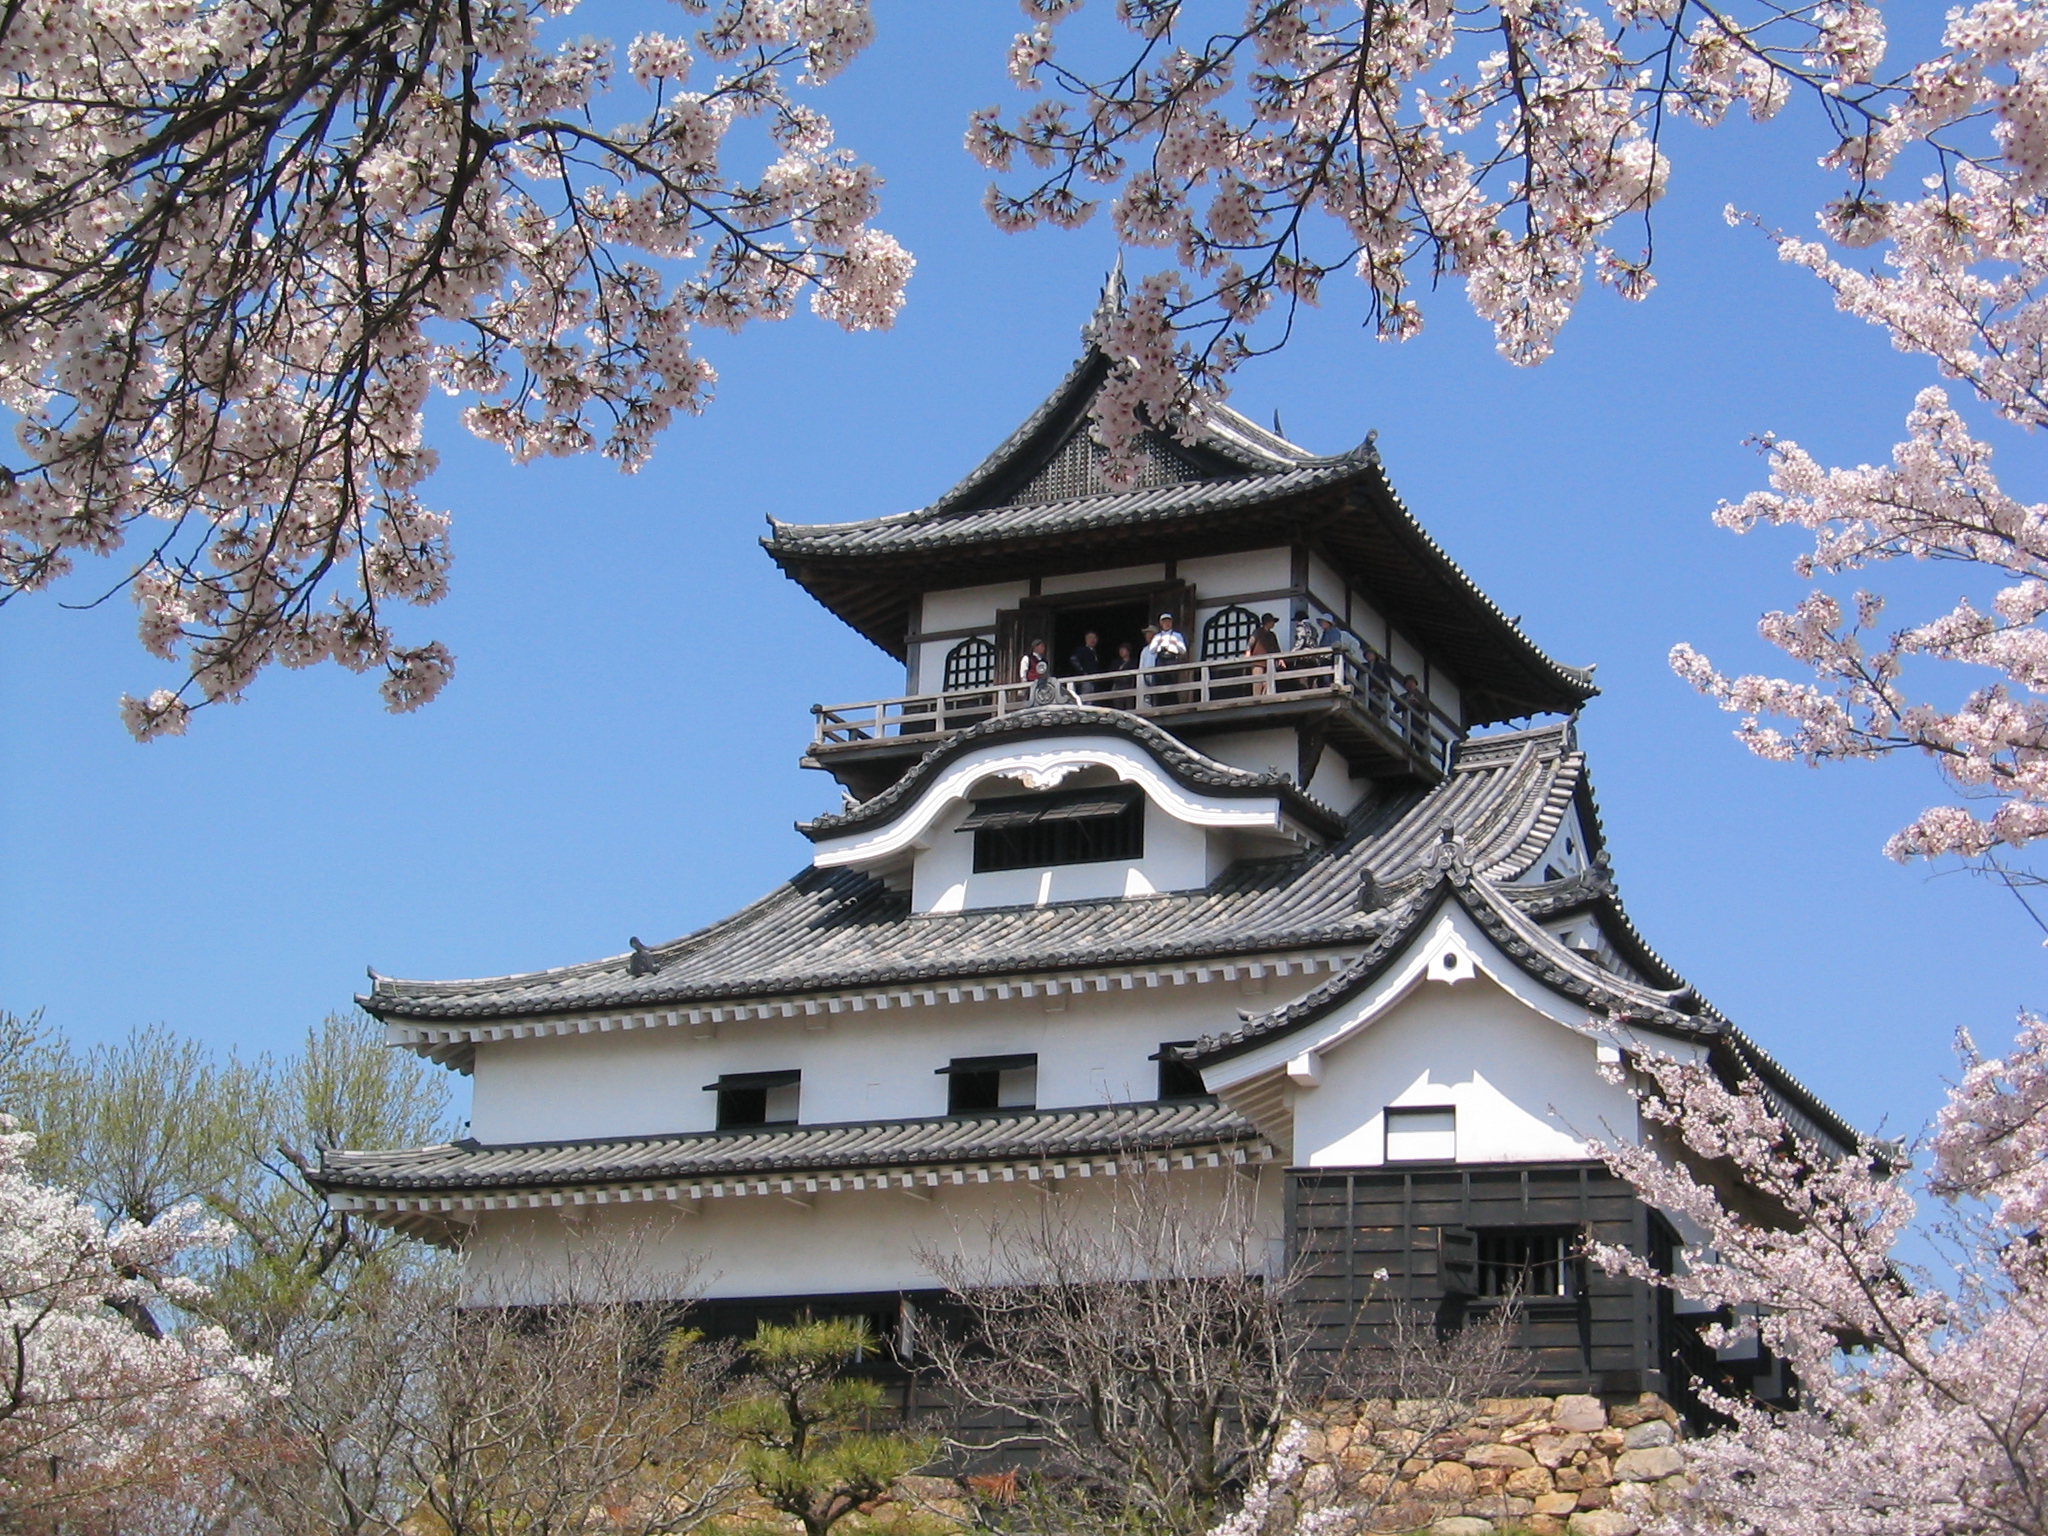 Original Japan castle